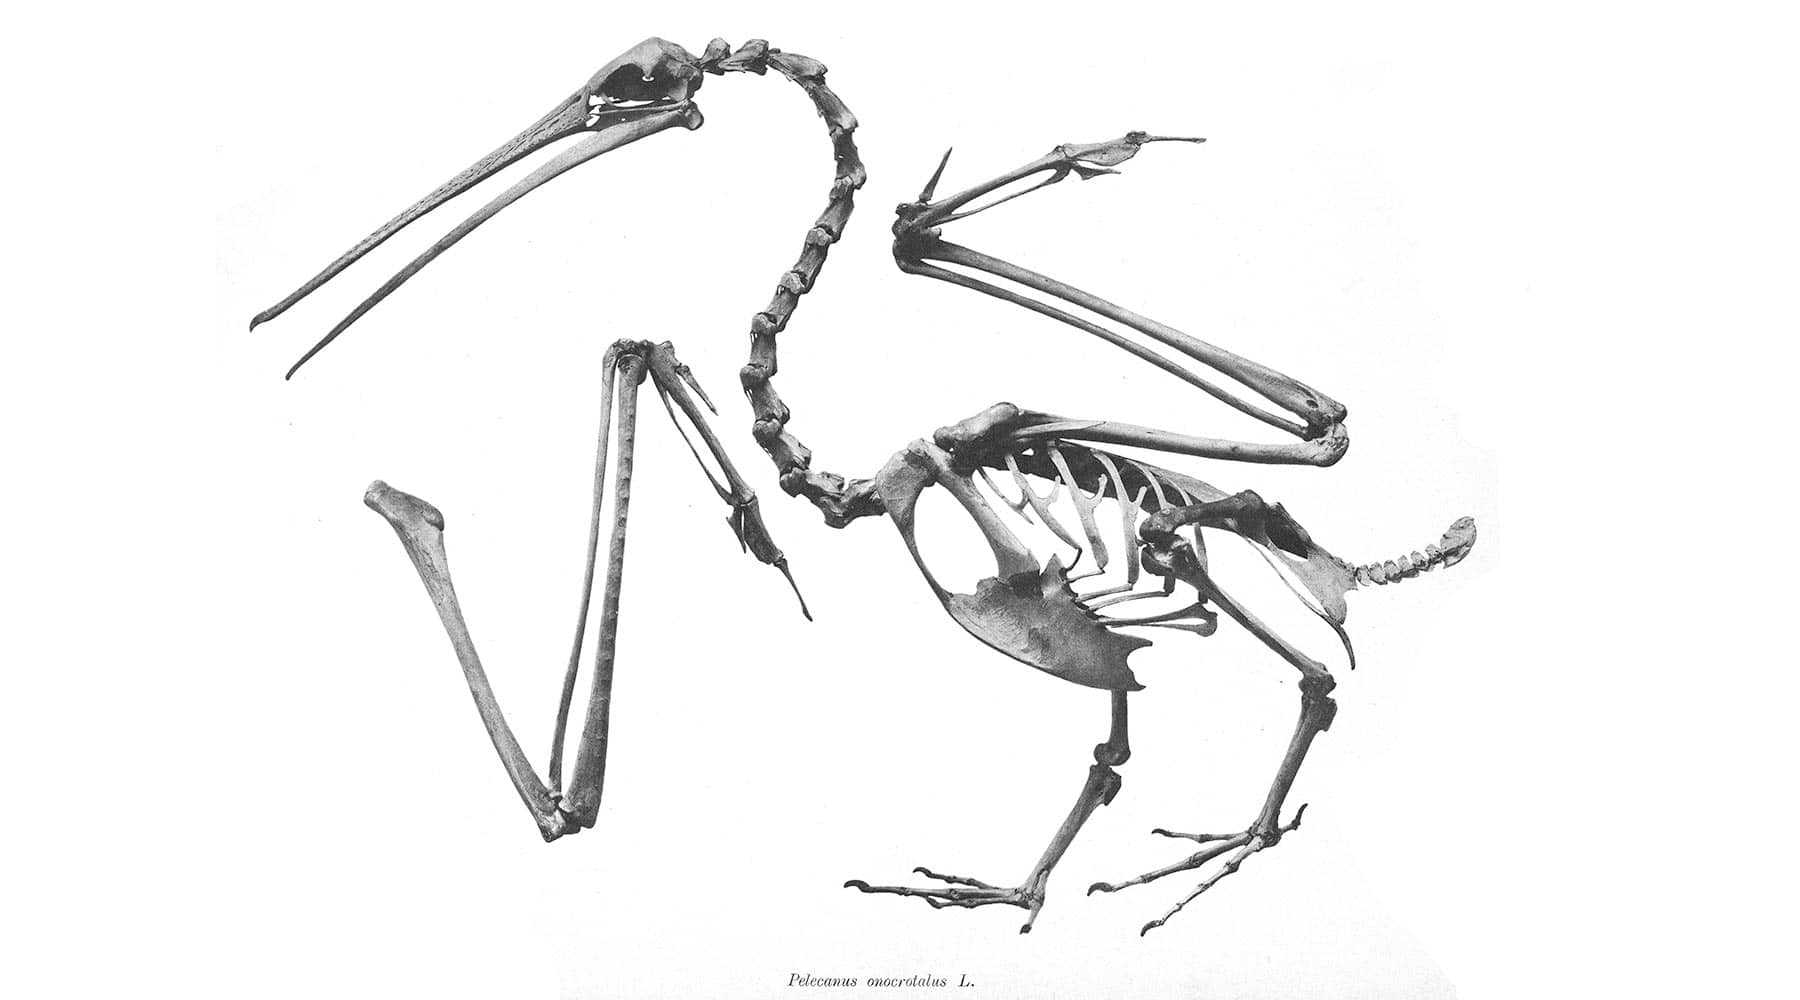 Science Shepherd Homeschool Curriculum image of a Pelecanus onocrotalus fossil